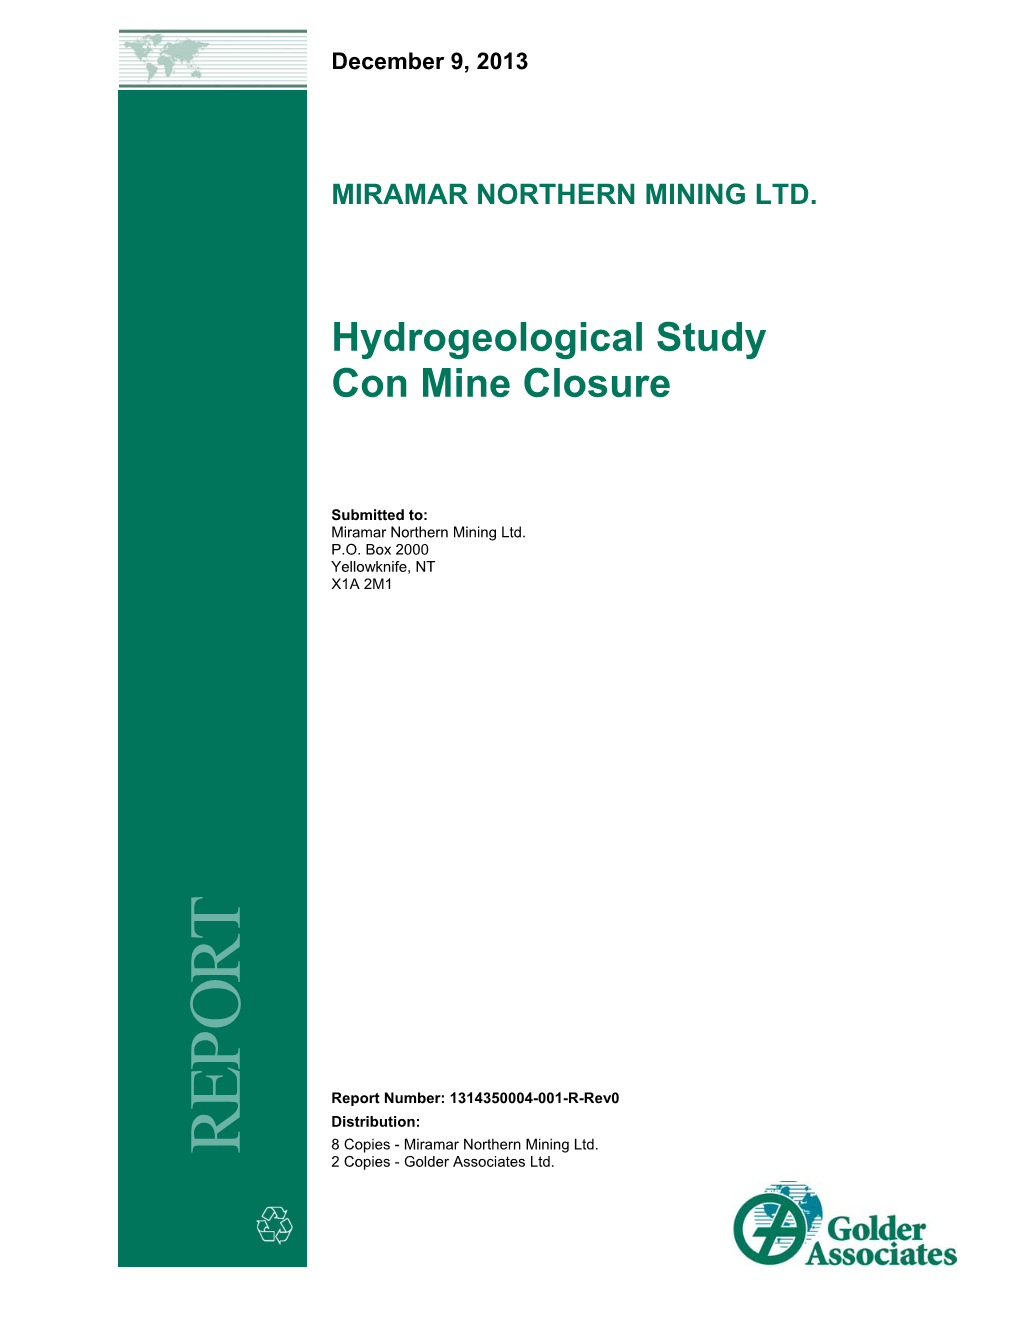 Hydrogeological Study Con Mine Closure